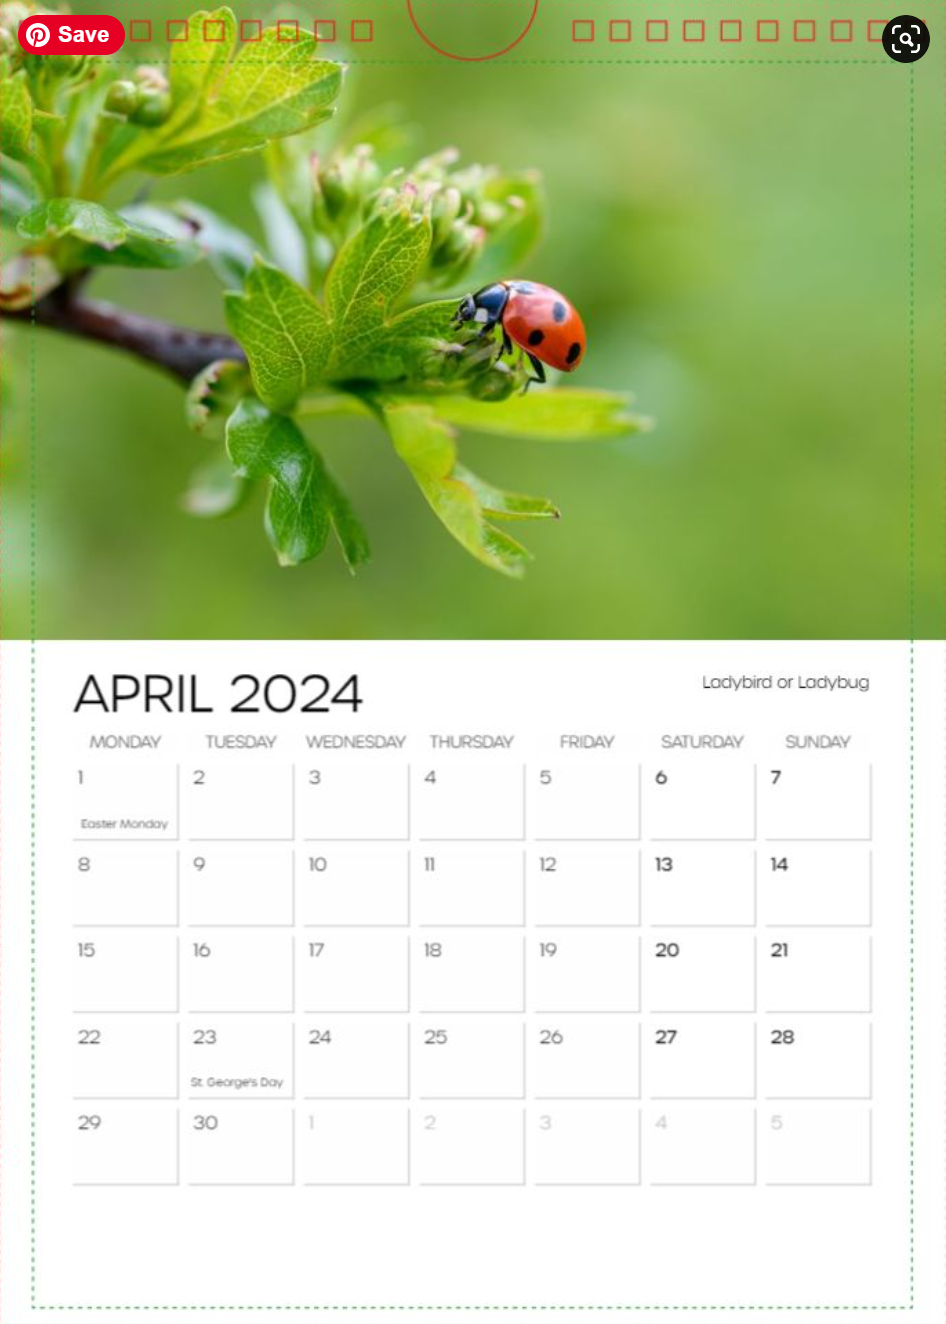 Photographic Calendar 2024 - April